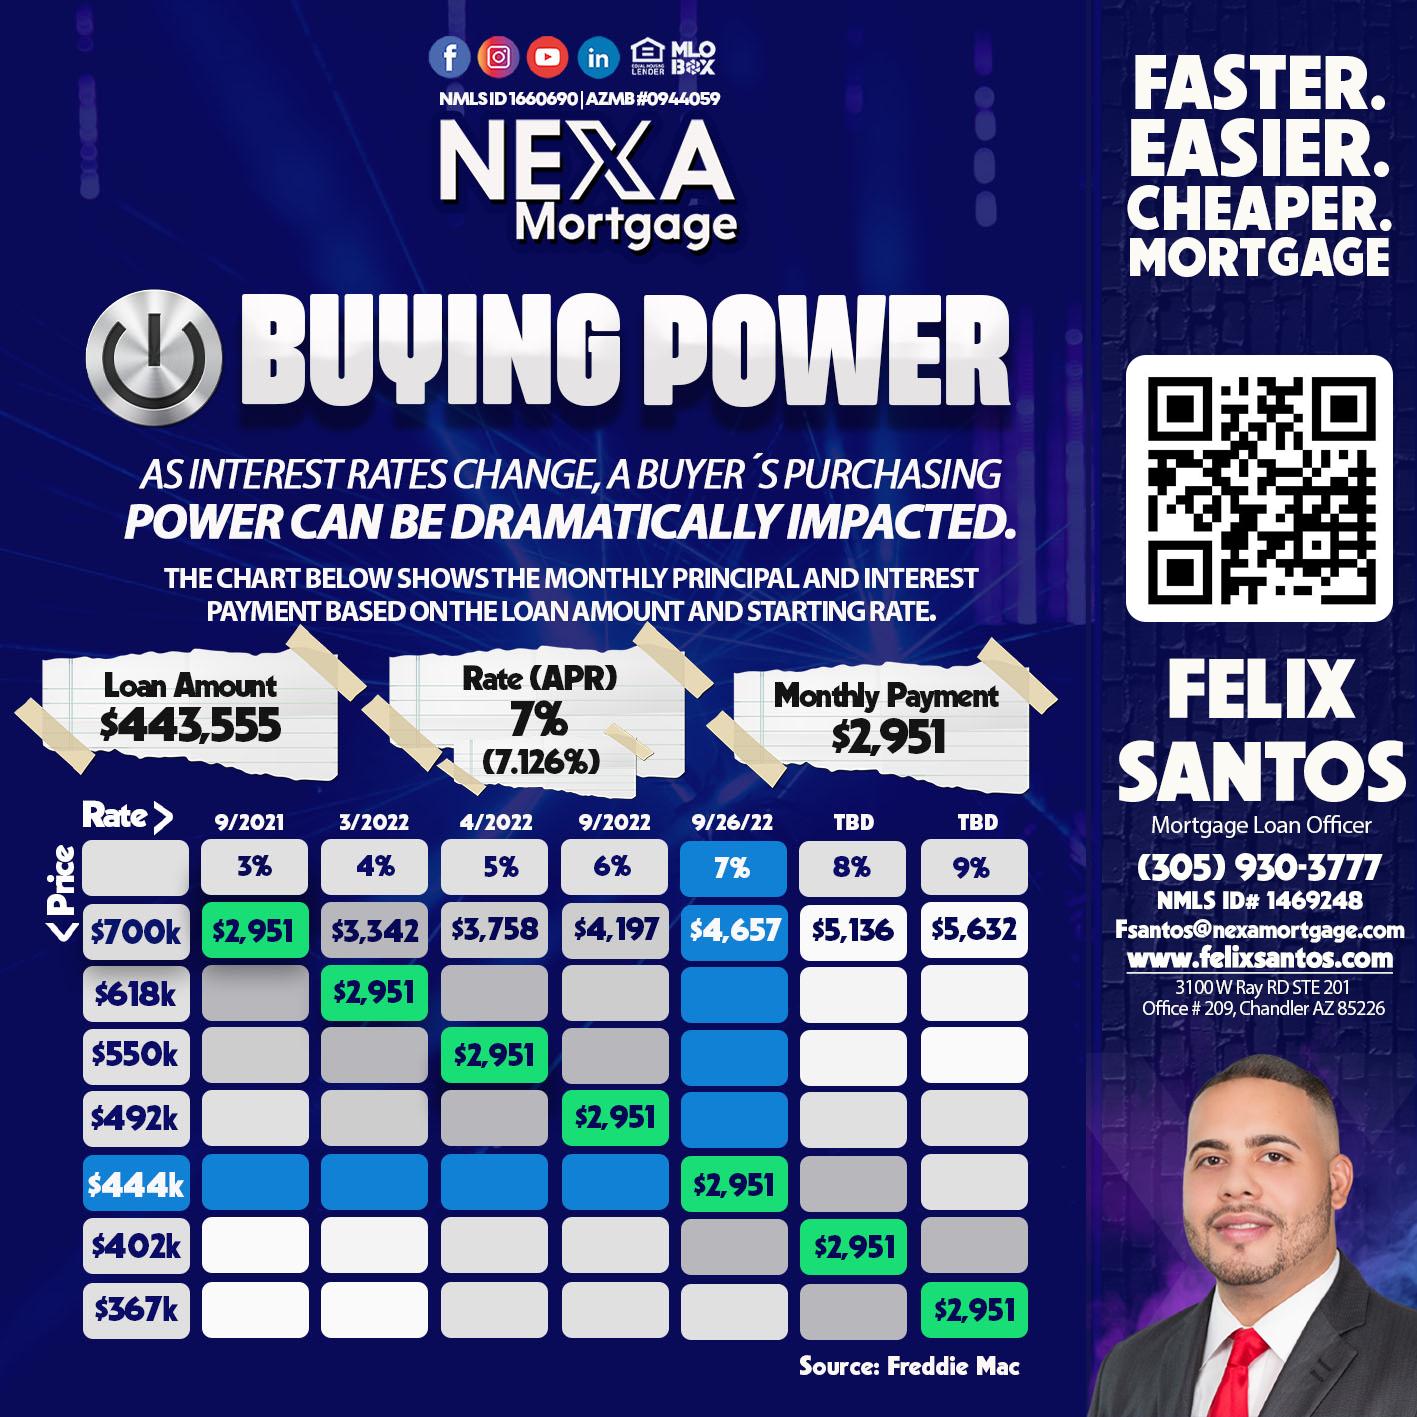 BUYING POWER - Felix Santos -Mortgage Loan Officer